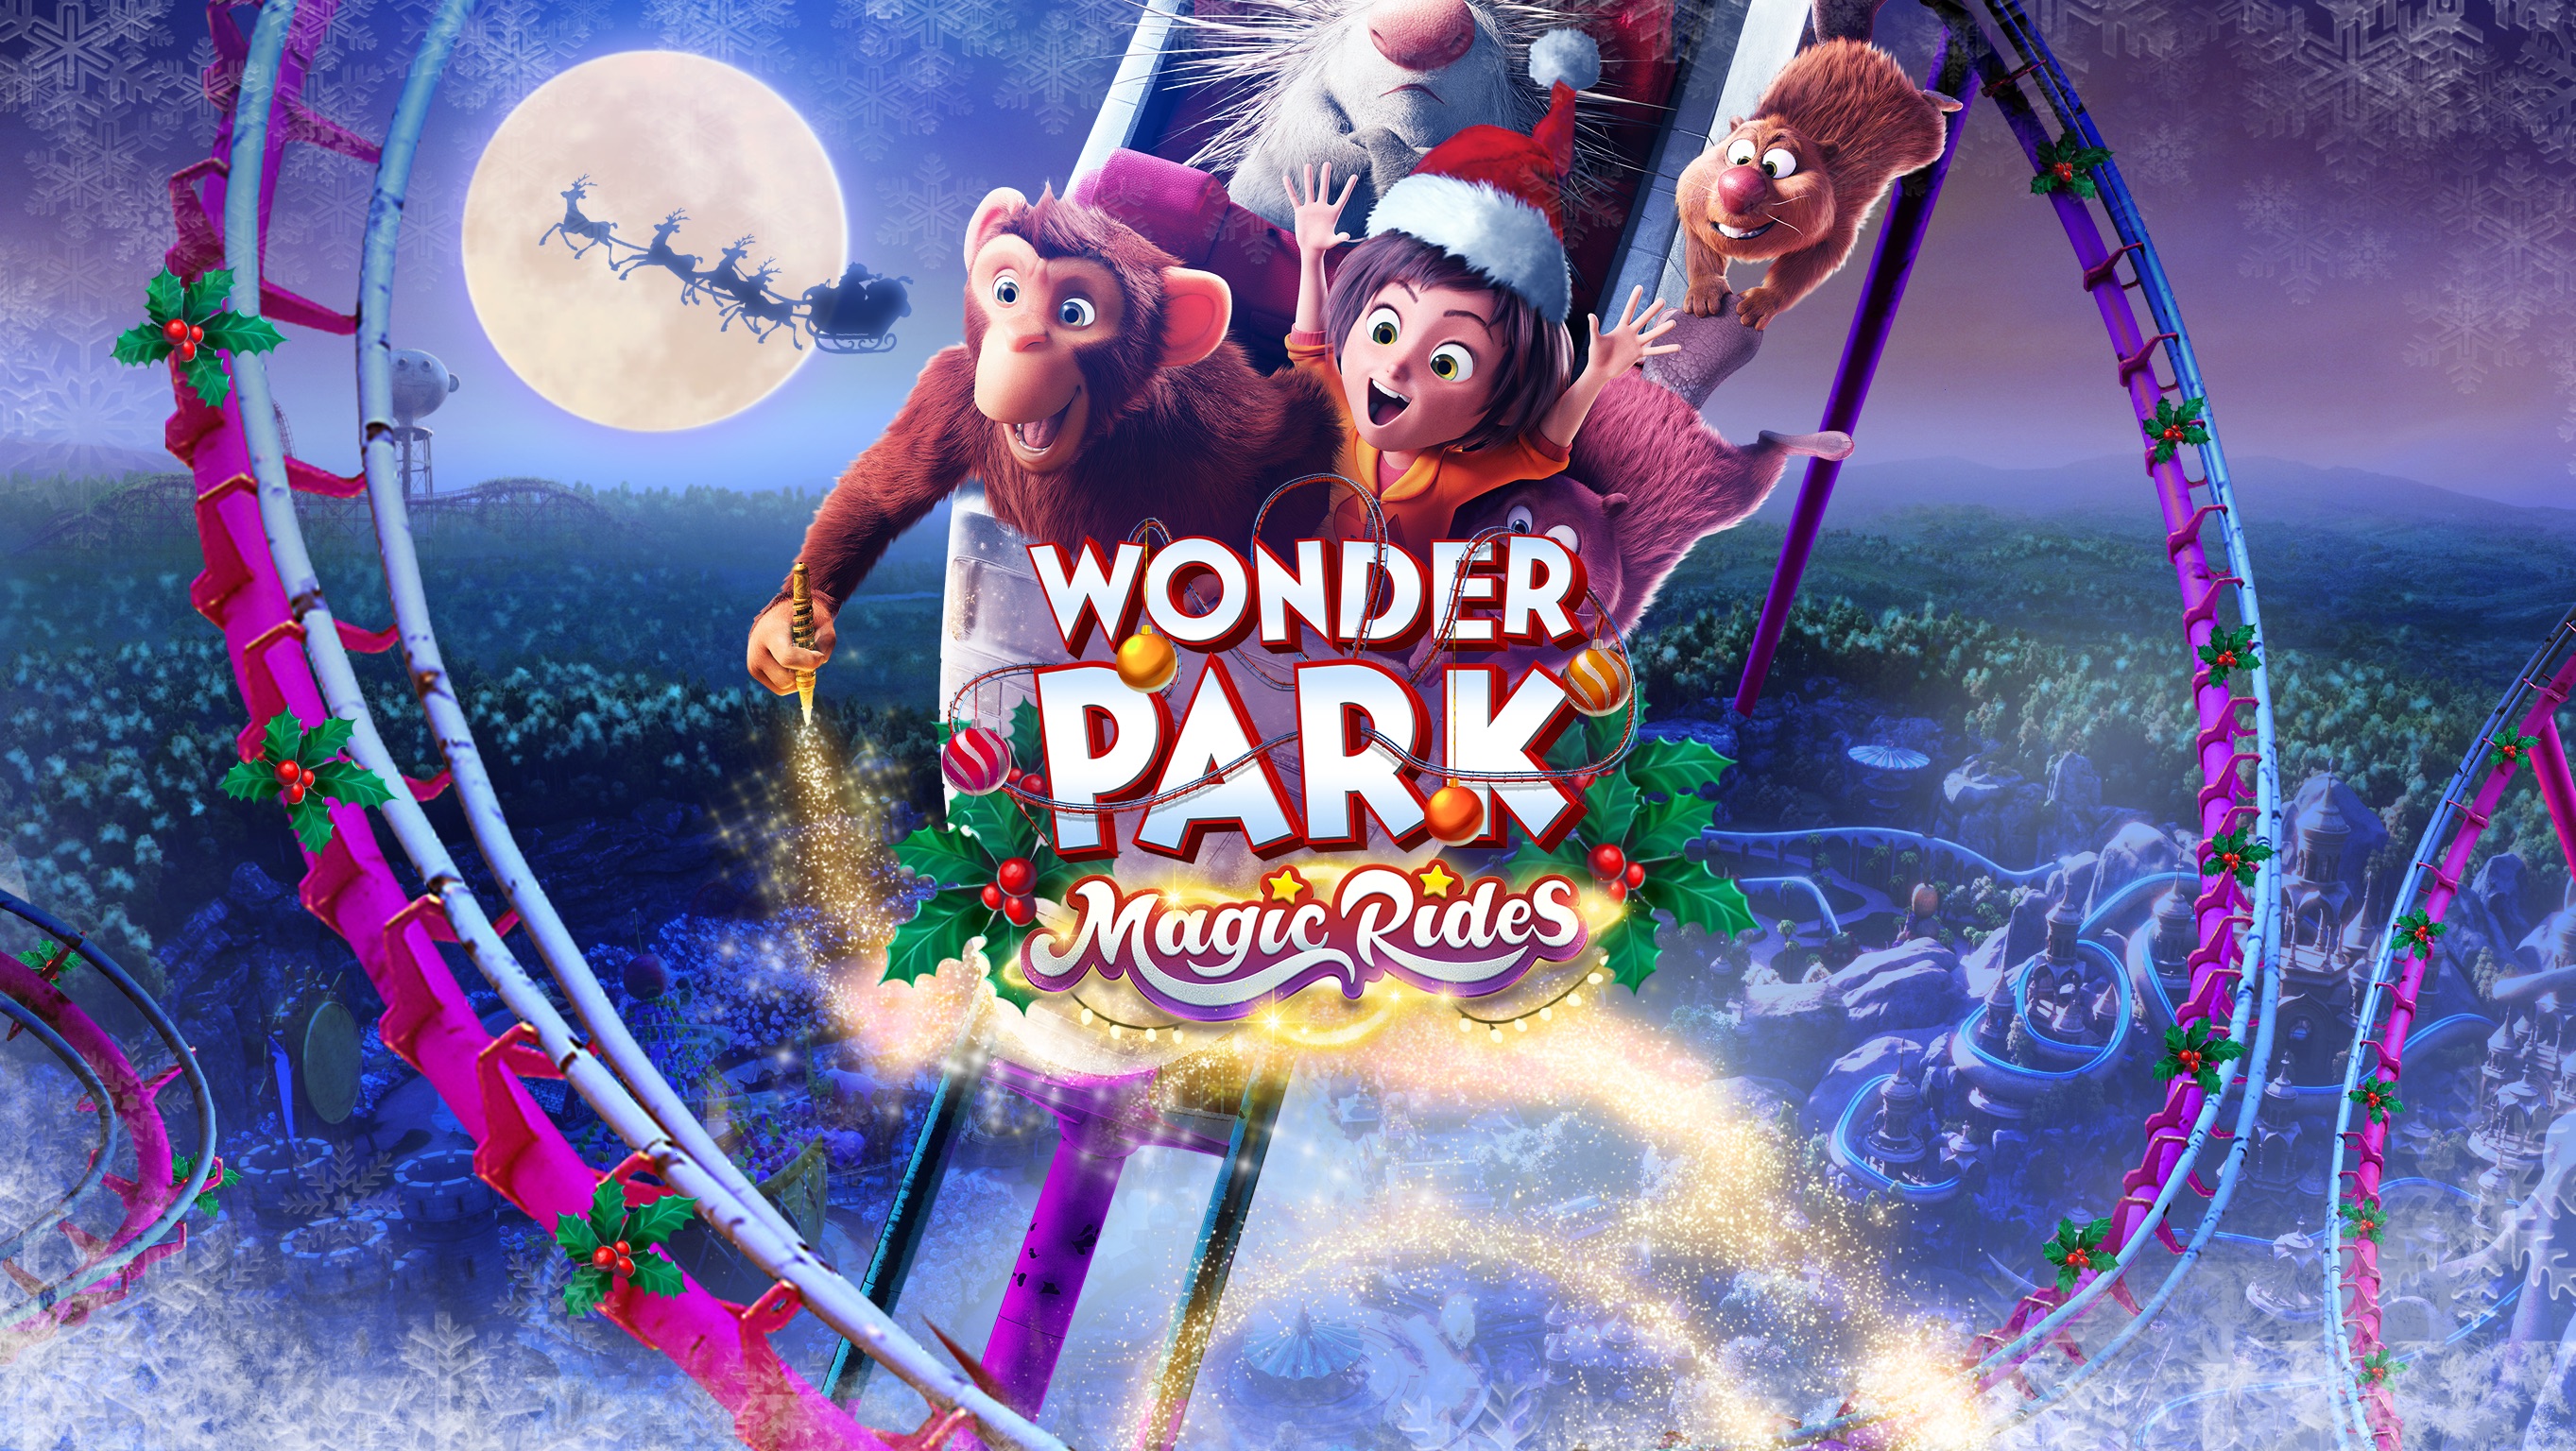 Wonder Park | Pixowl – Mobile Games Studio